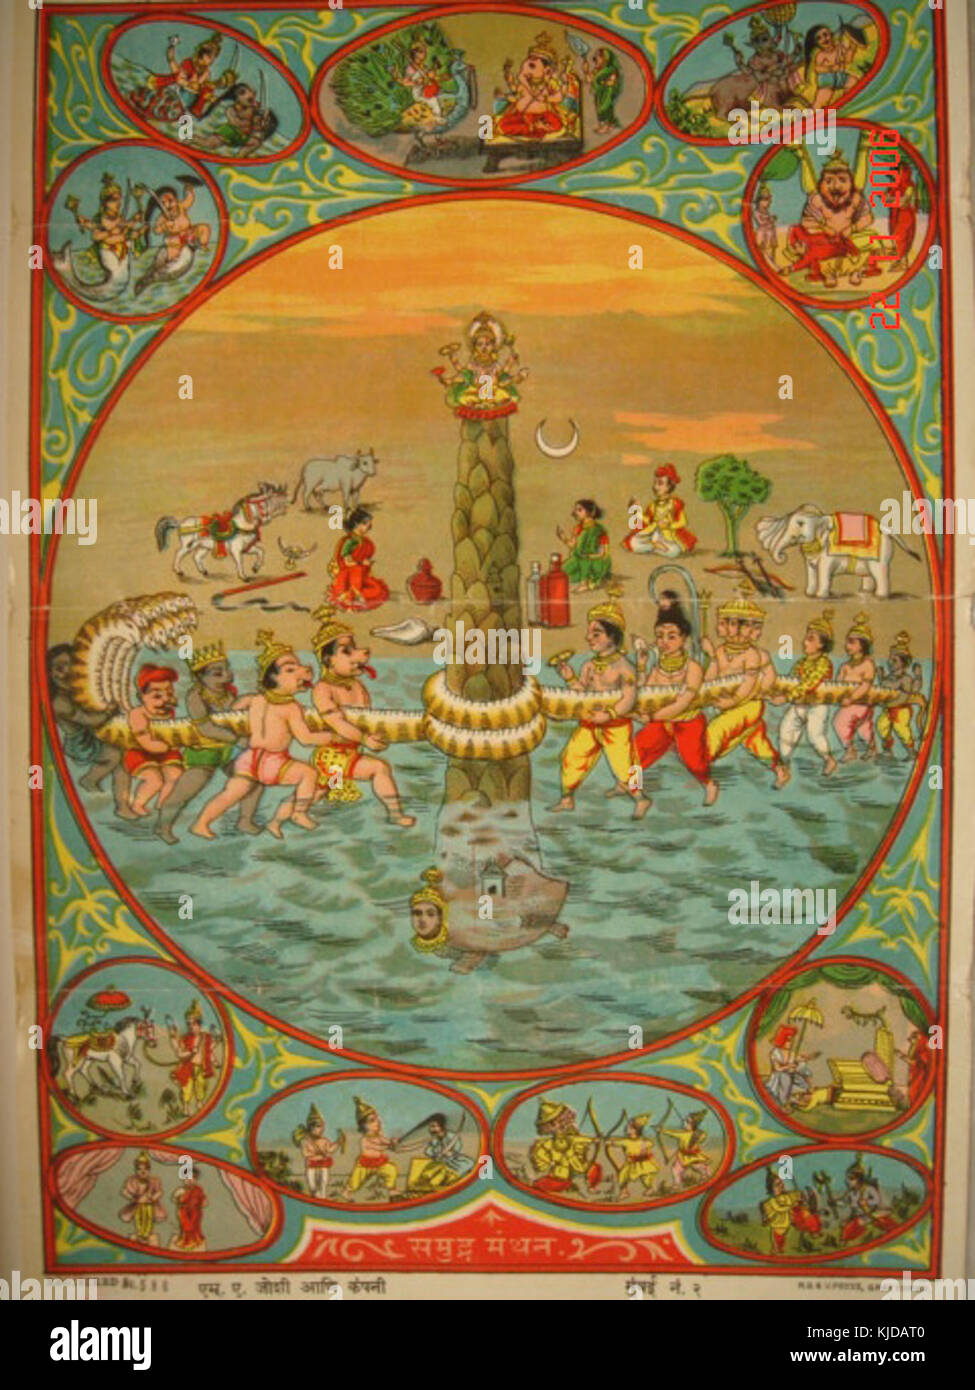 Samudra Manthan | Lord shiva, Art, Samudra